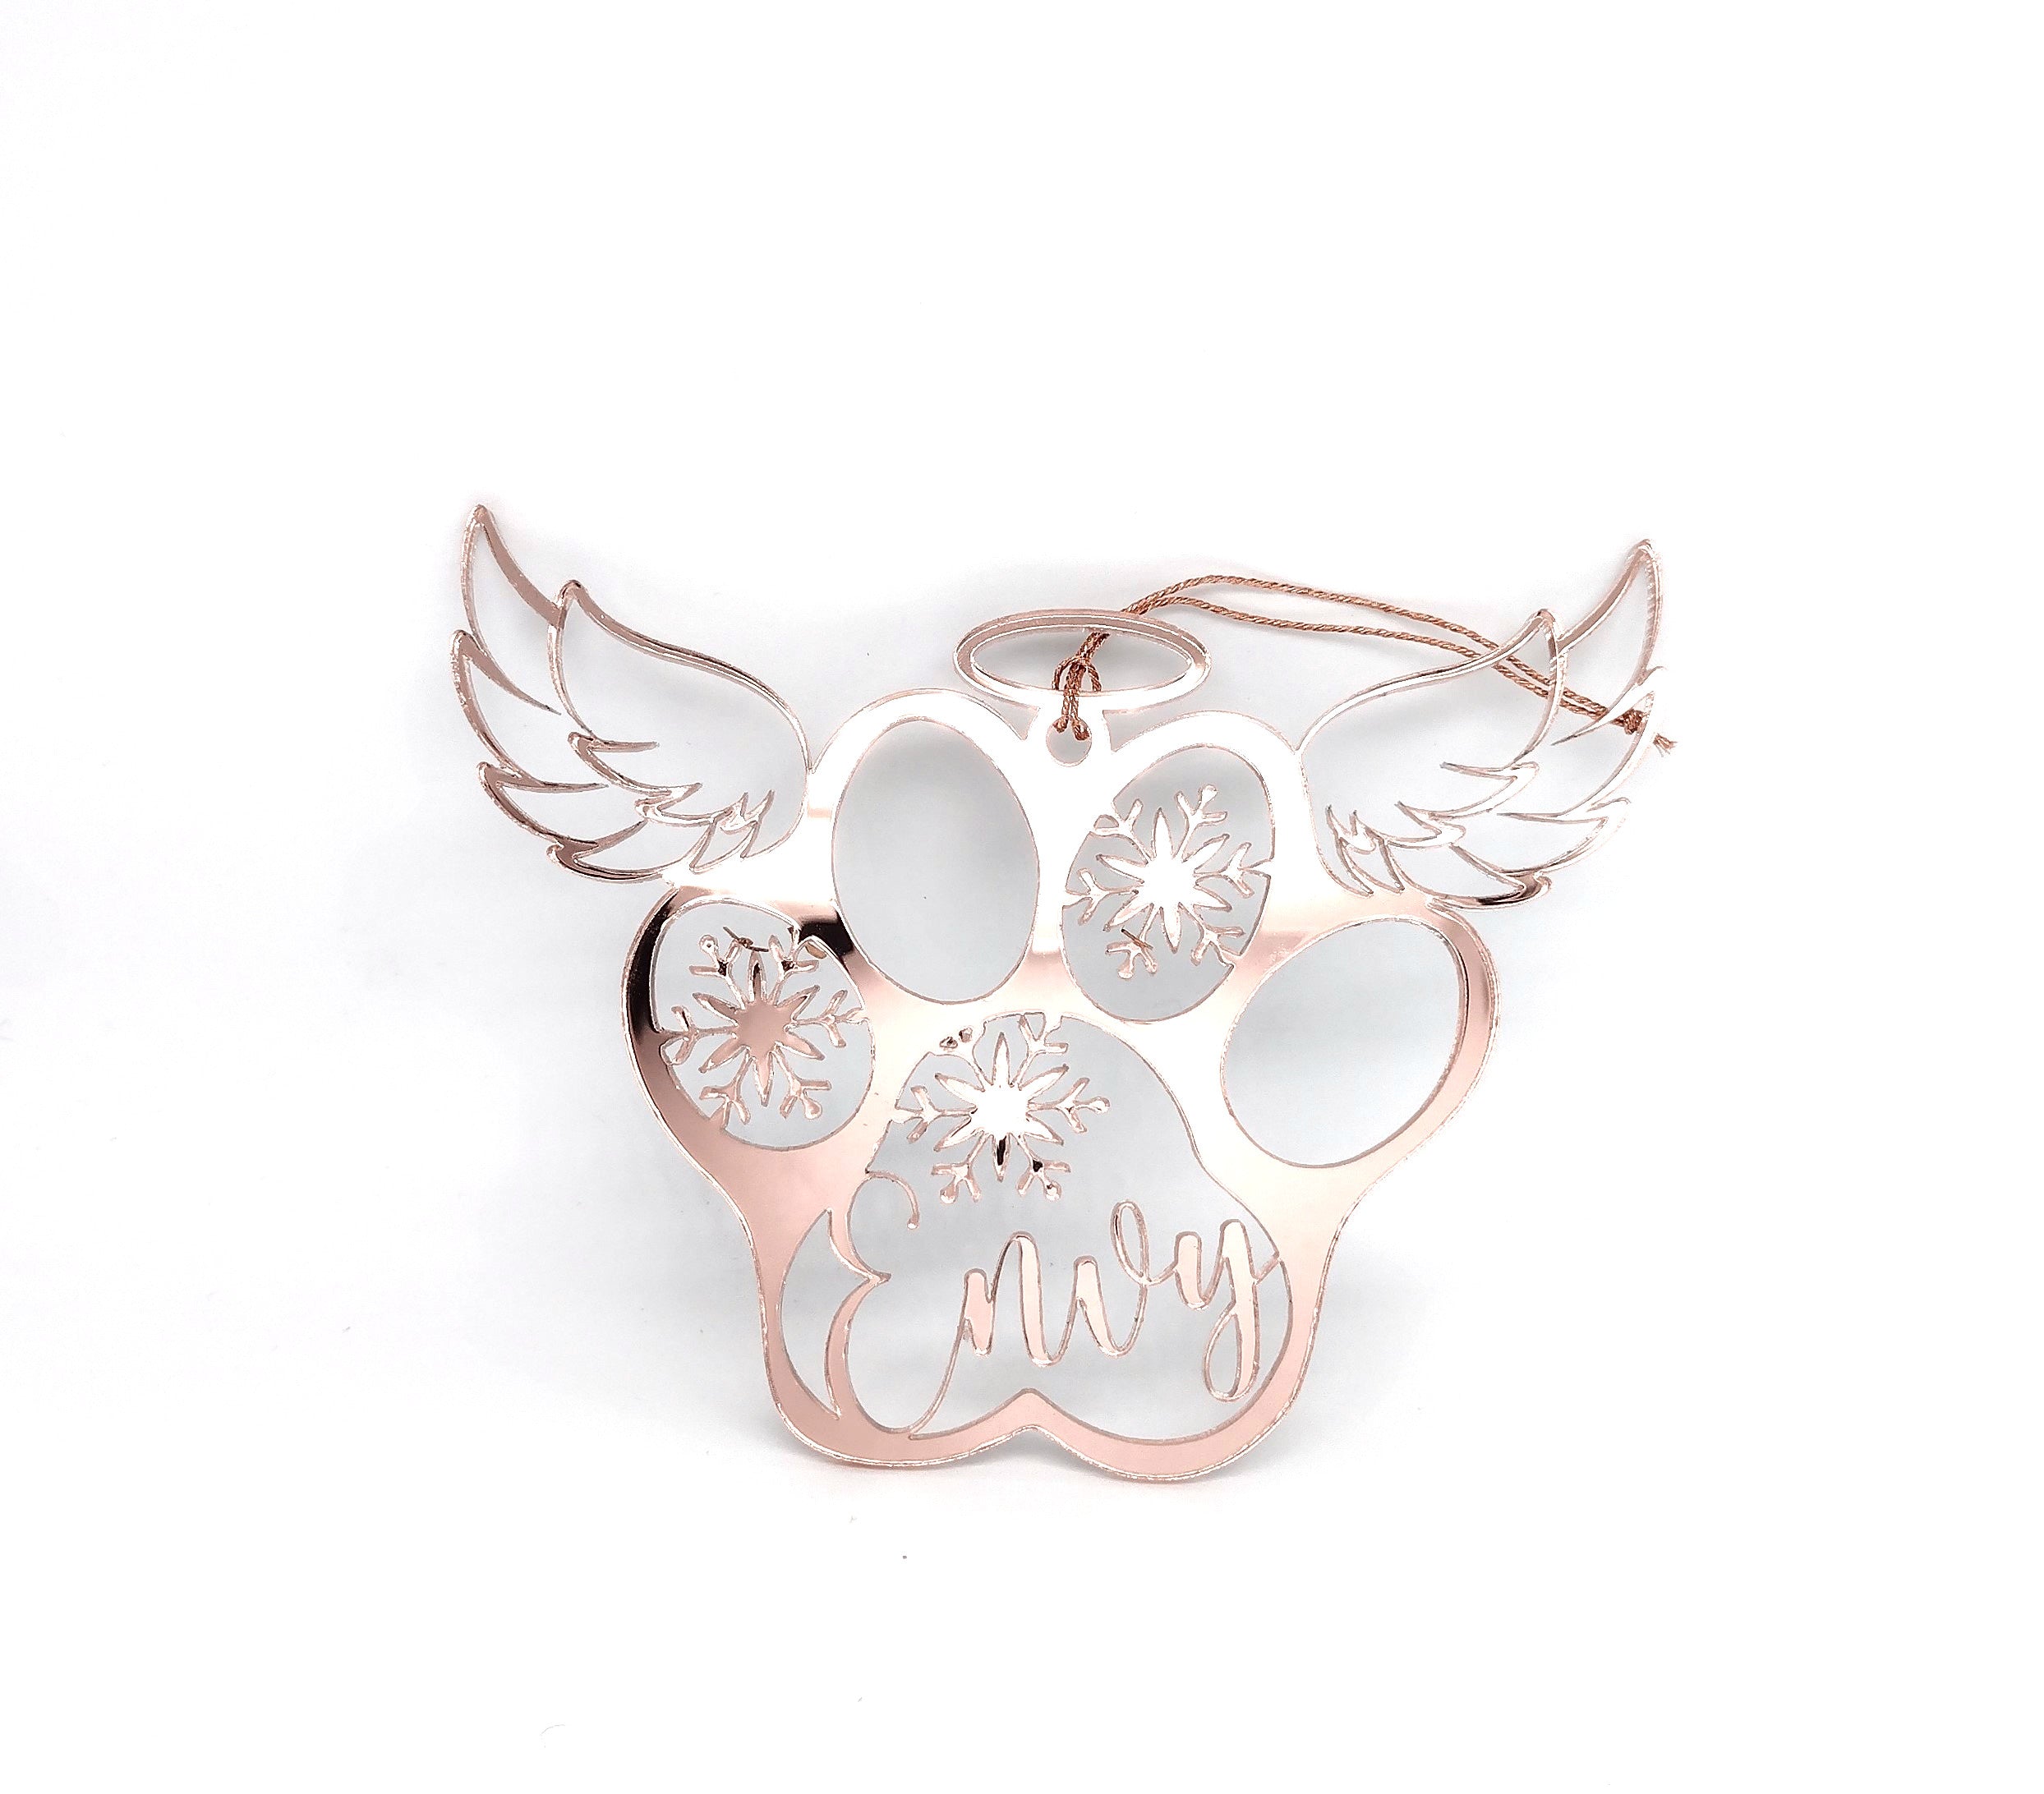 Paw Angel + Name + Snowflake Ornament